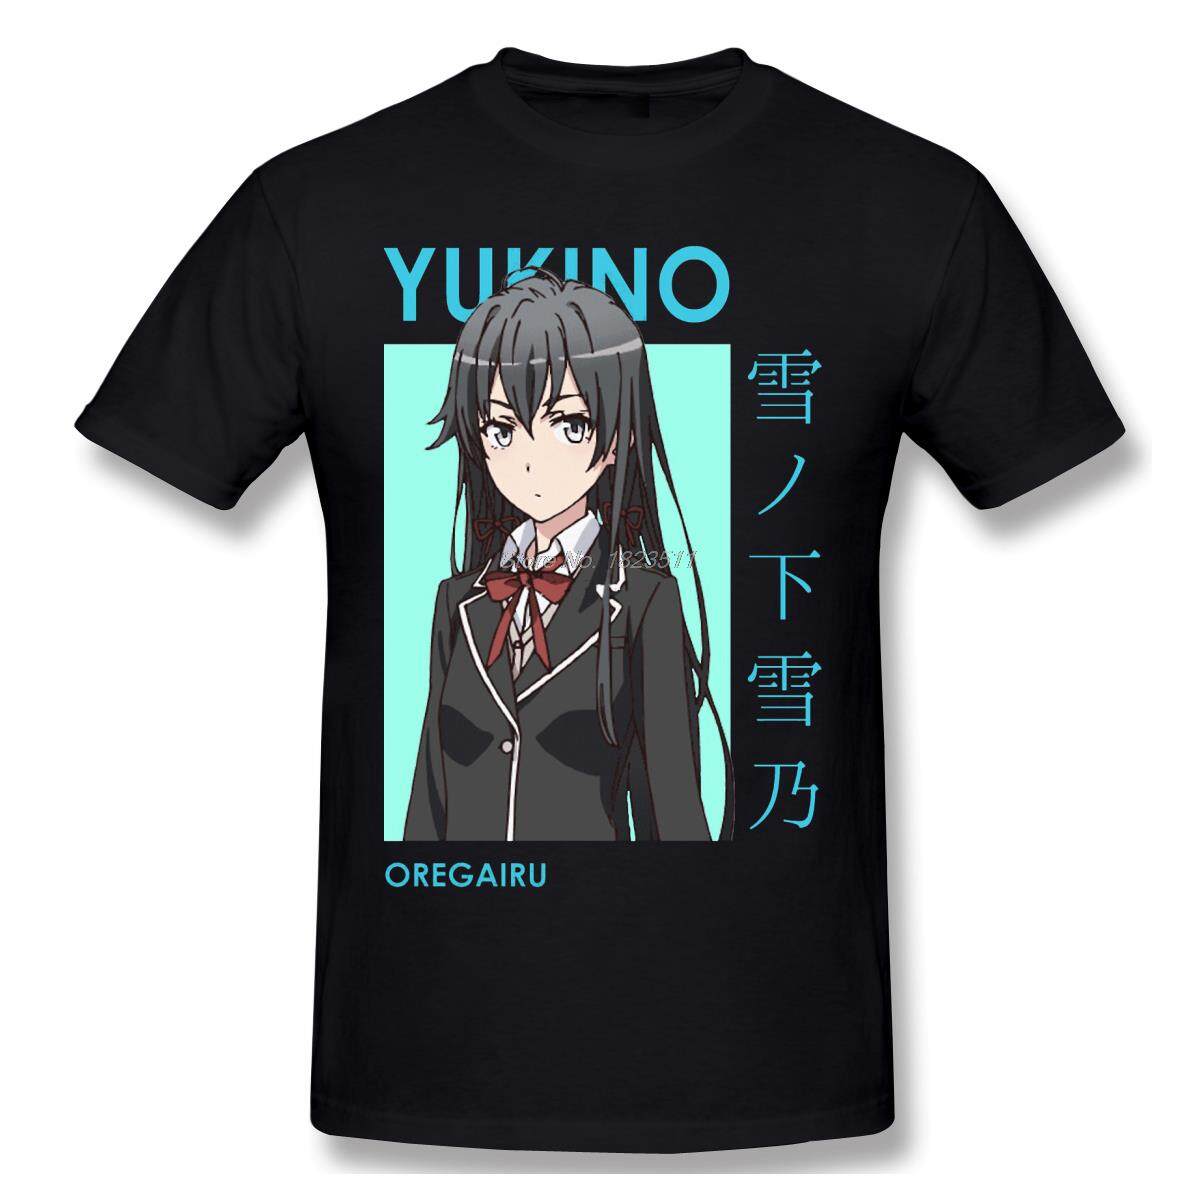 Anime Yukino Yukinoa Oregairu Snafu Card Anime T-Shirt Funny Tees O Neck  Cotton Tees Tops Harajuku Streetwear XS-4XL 5XL 6XL 